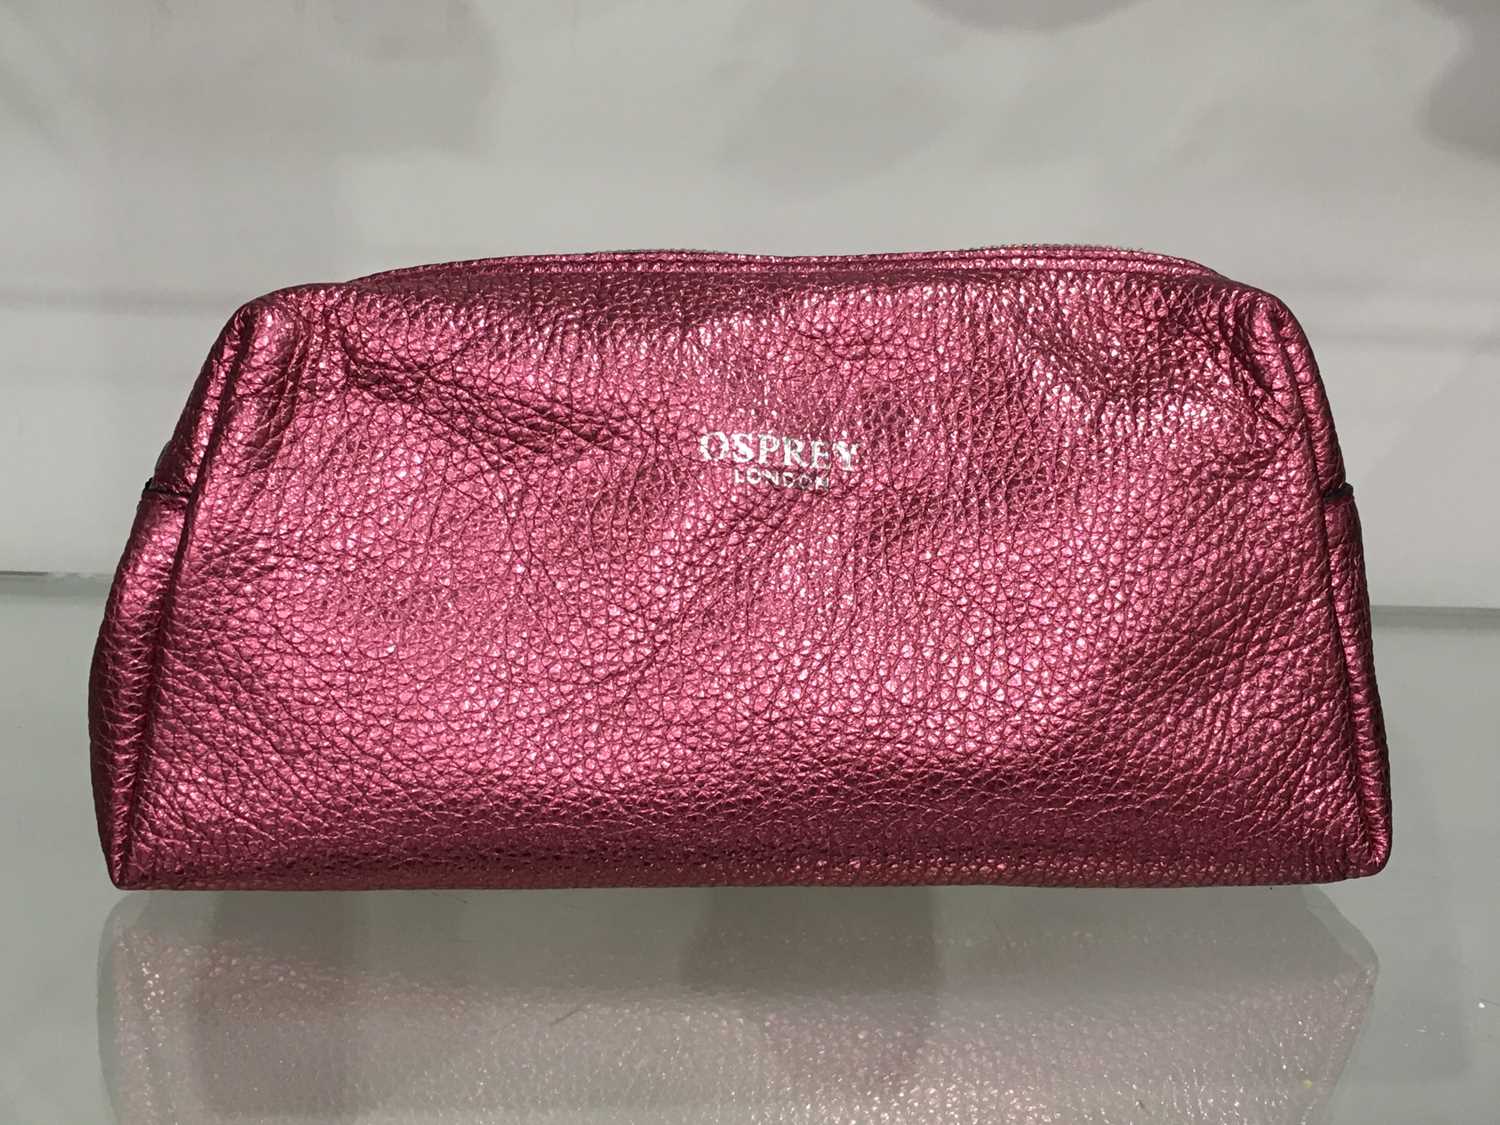 Osprey London, a pink metallic makeup pouch by Graeme Ellisdon, with top zip fastening, measuring